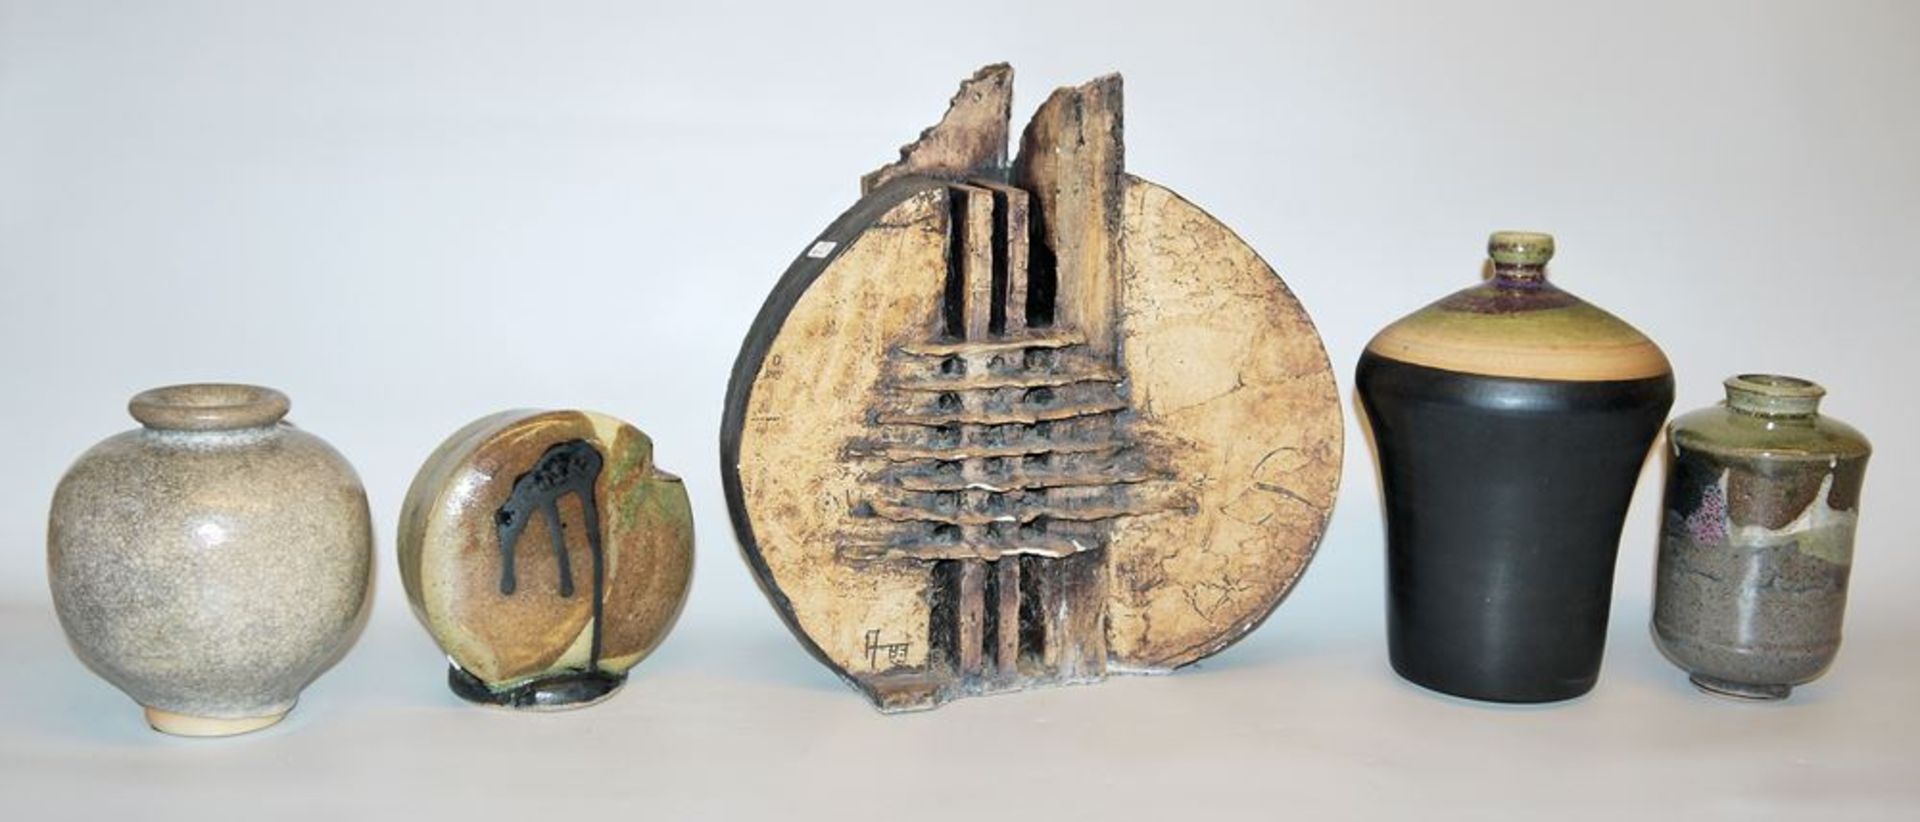 Reinhard Ader, five studio ceramics